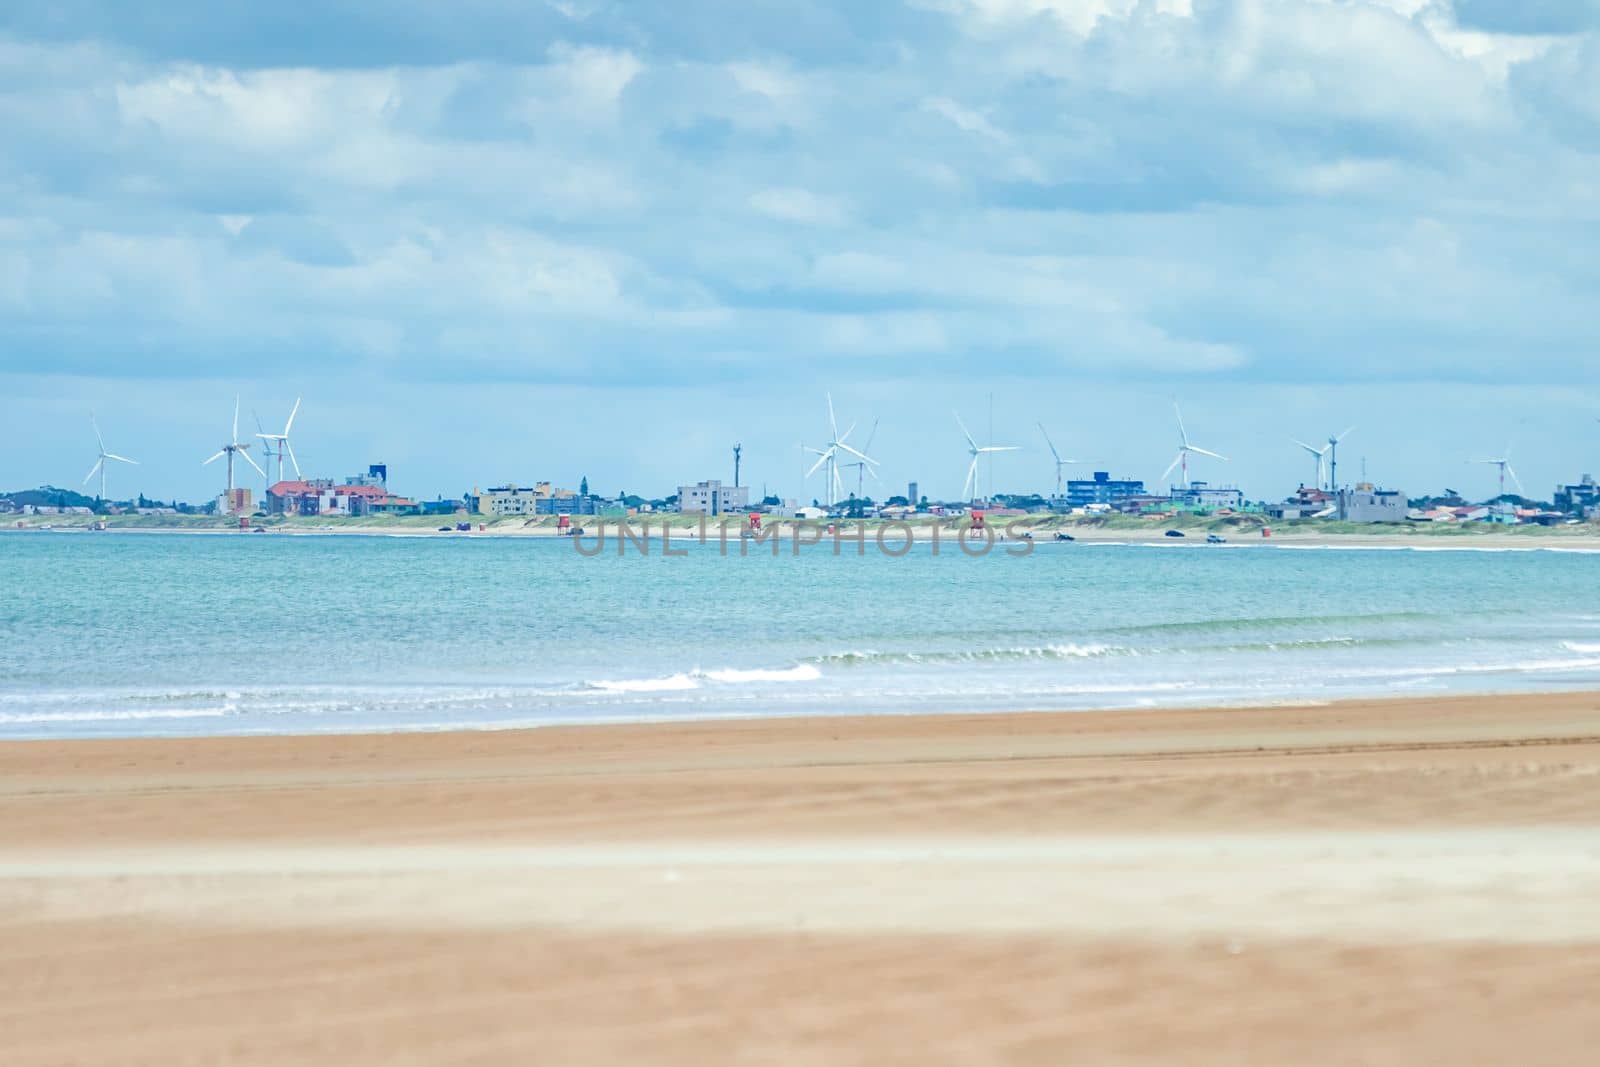 Casino beach, world's longest sea sandy beach by Edophoto